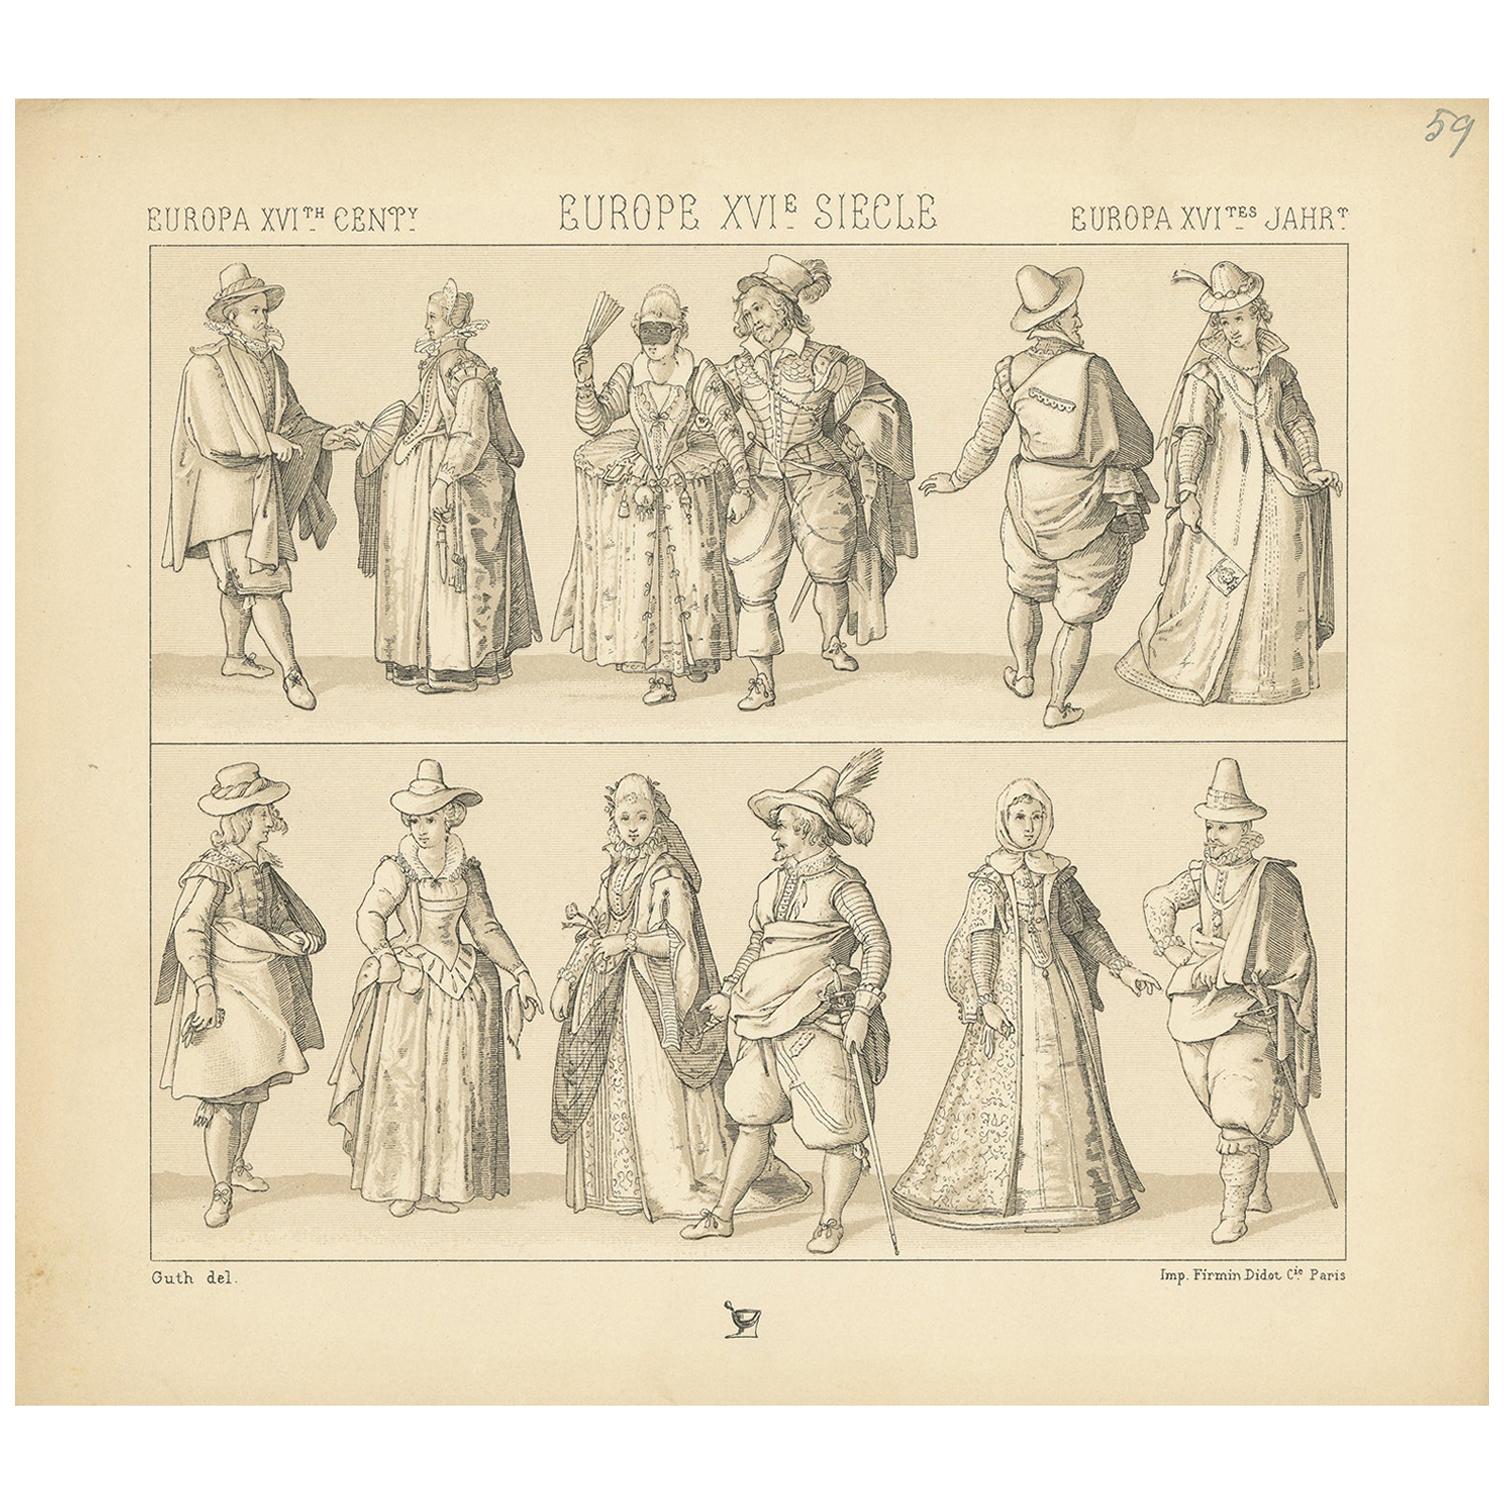 Pl. 59 Antique Print of European XVIth Century Costumes by Racinet